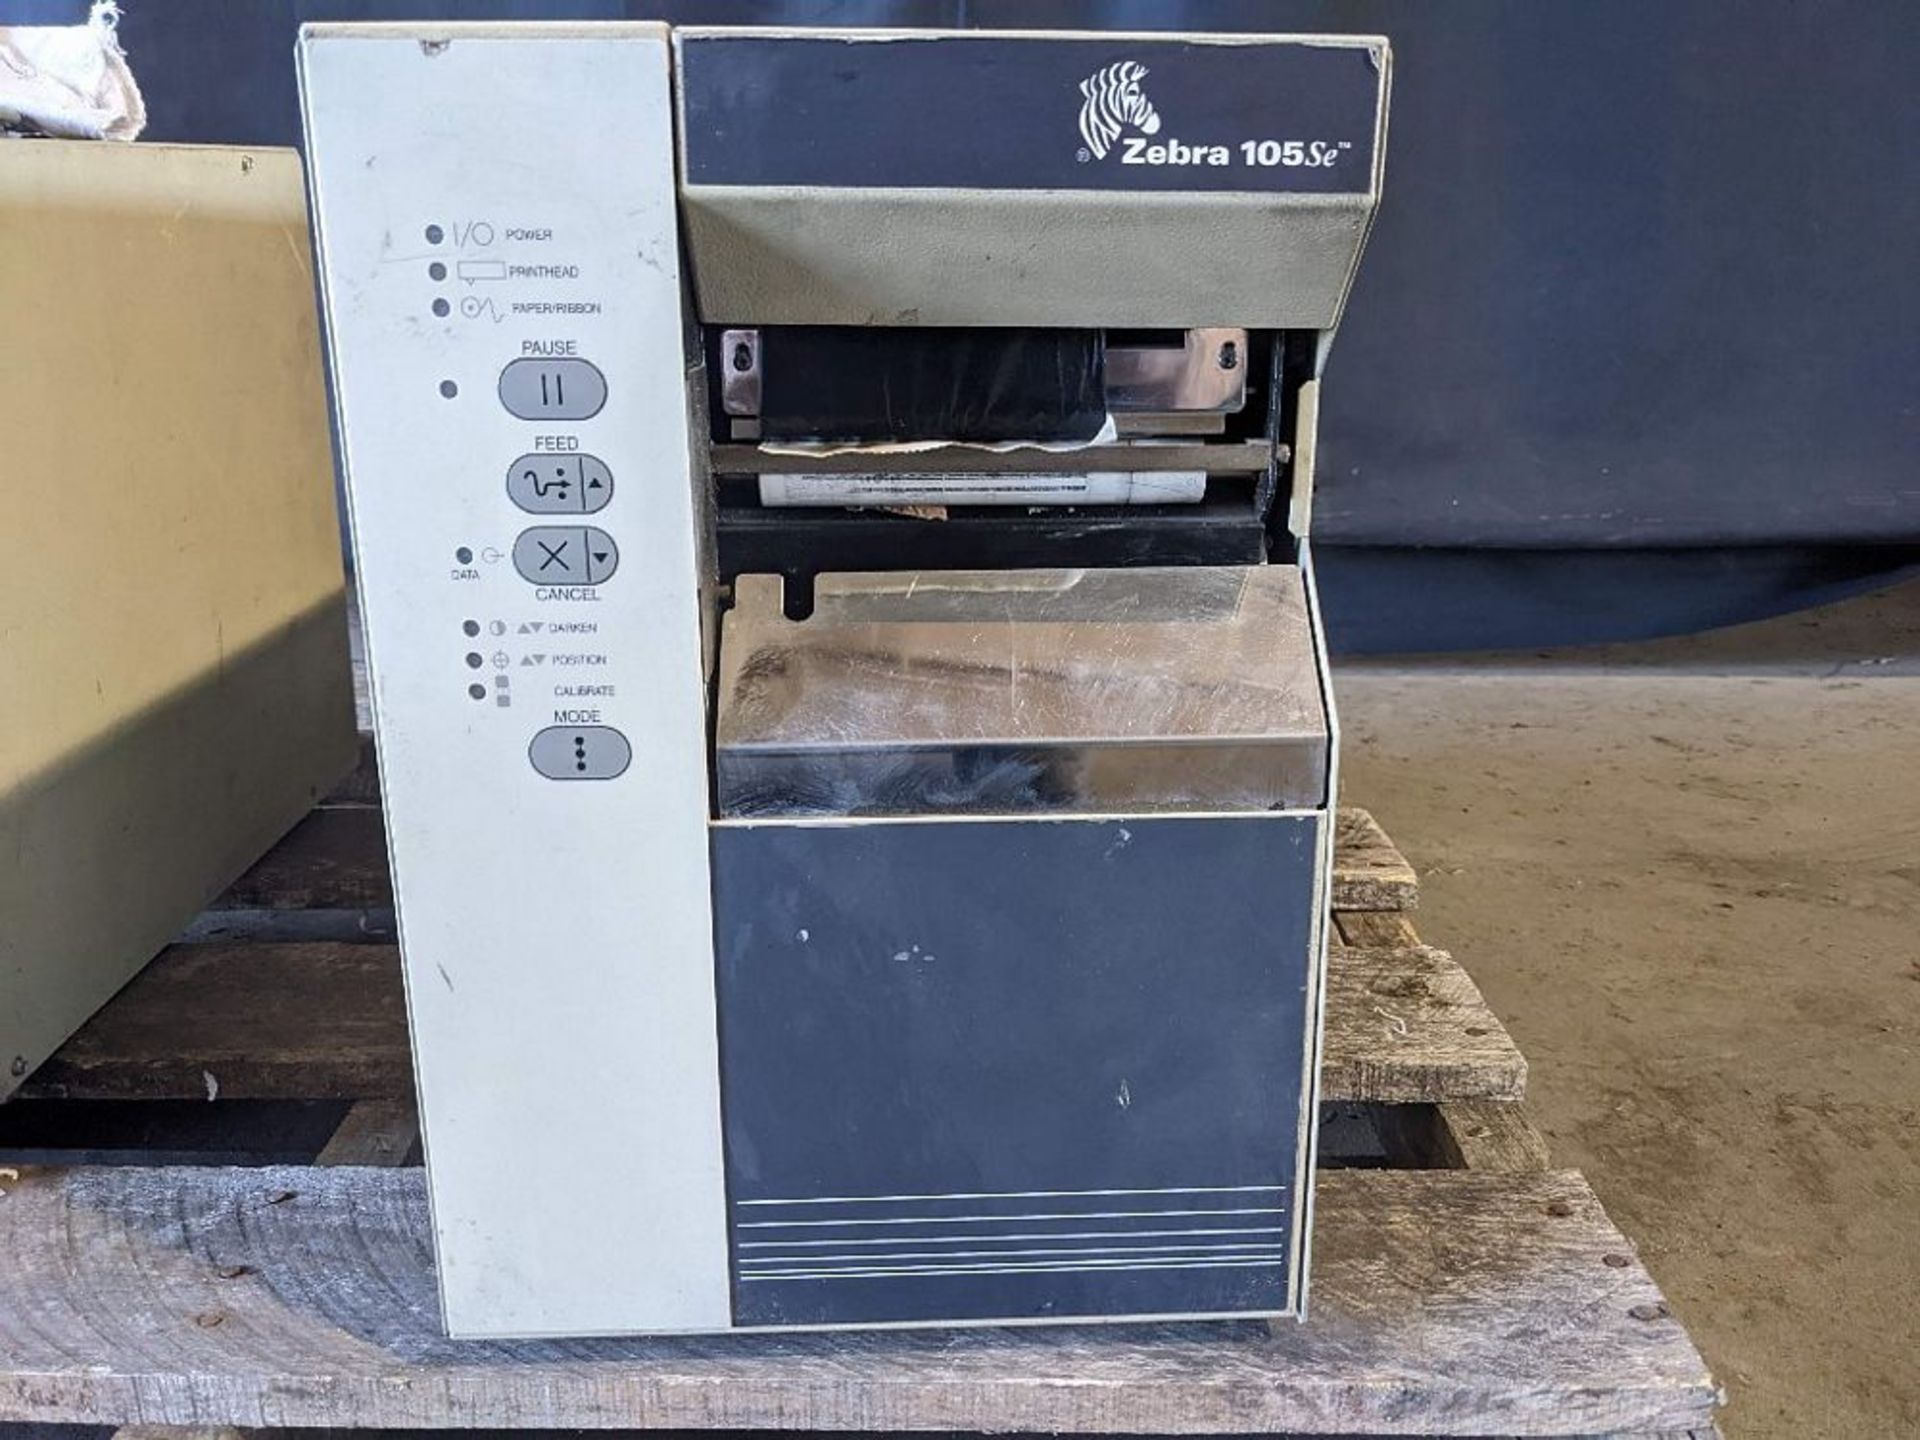 Qty (1) Zebra 105Se Thermal Transfer Label Printer - This Zebra printer serves for a wide variety of